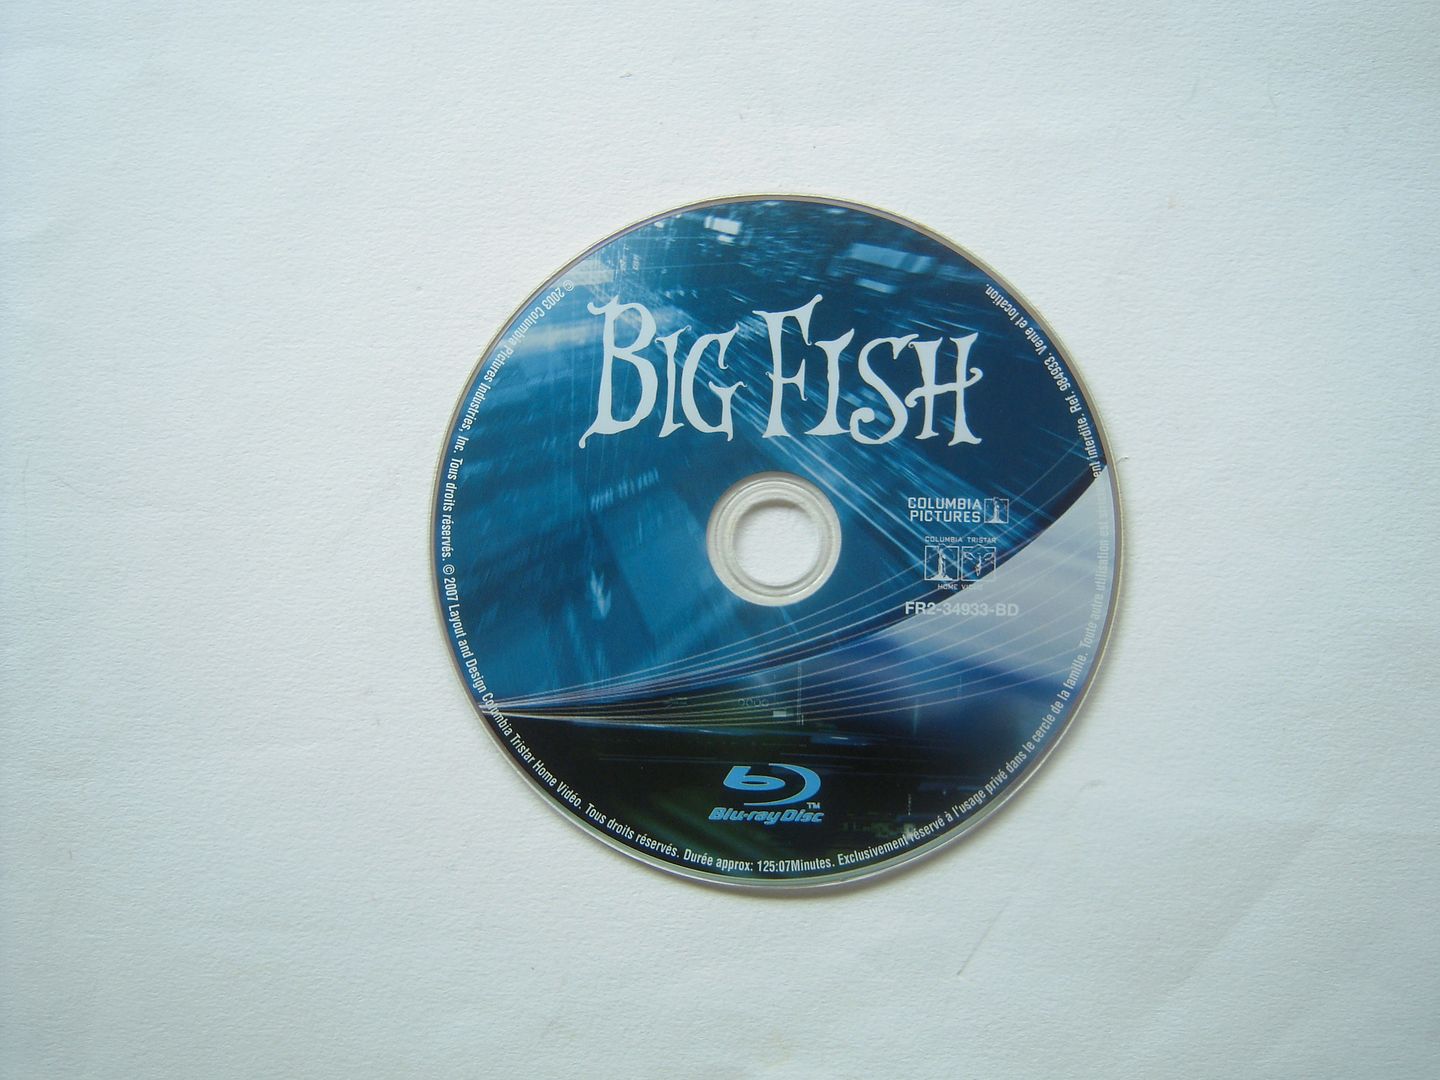 Big Fish - DVD/Bluray DSCN2368